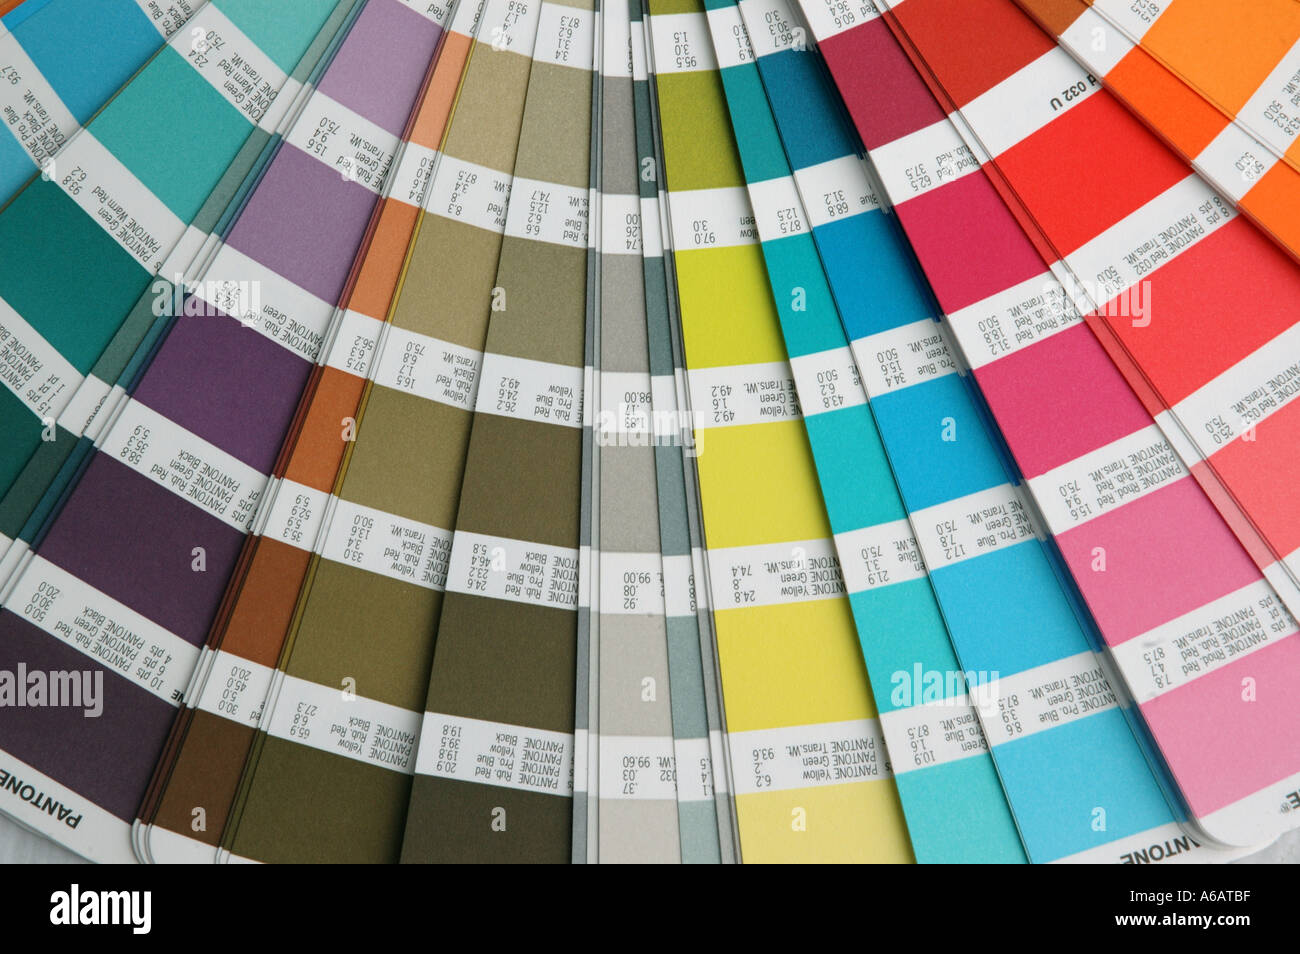 Pantone printing industry standard colour charts dsca 2153 Stock Photo -  Alamy